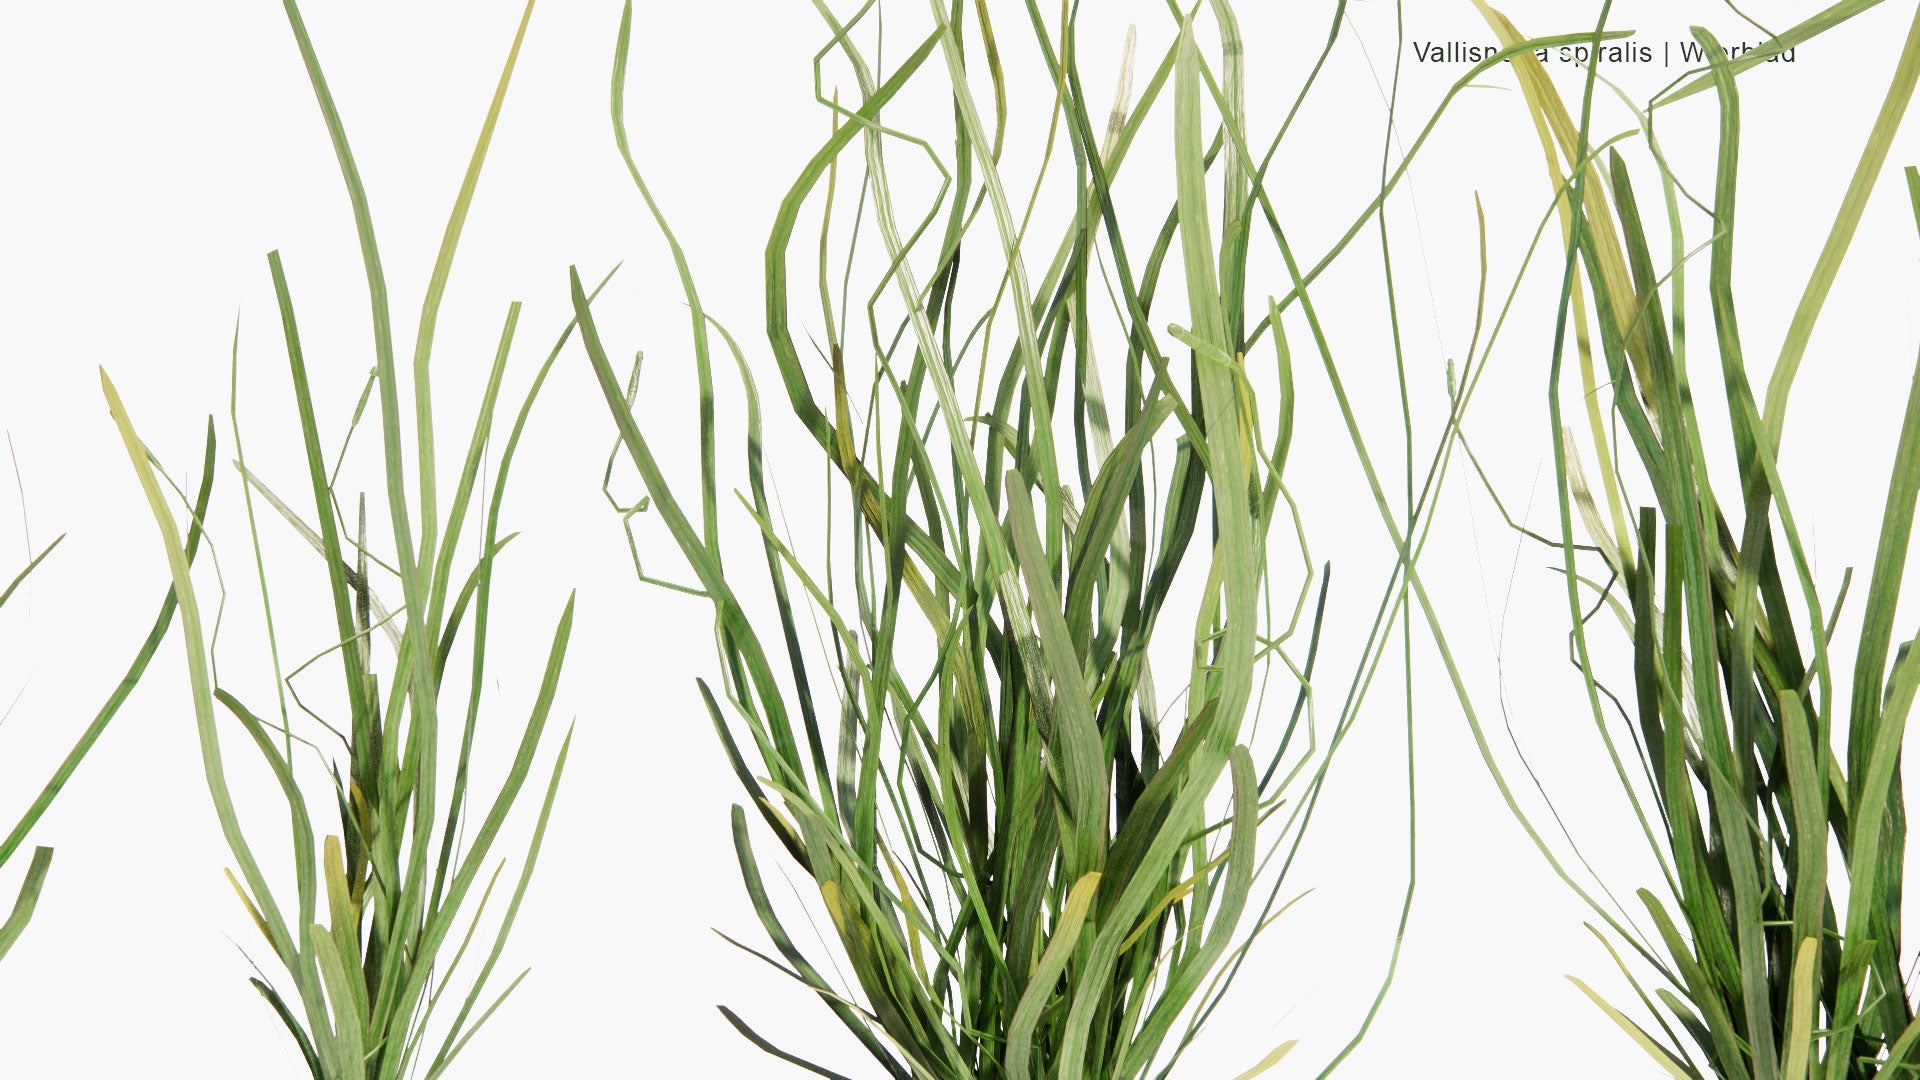 Low Poly Vallisneria Spiralis - Wierblad, Tape Grass, Eel Grass (3D Model)